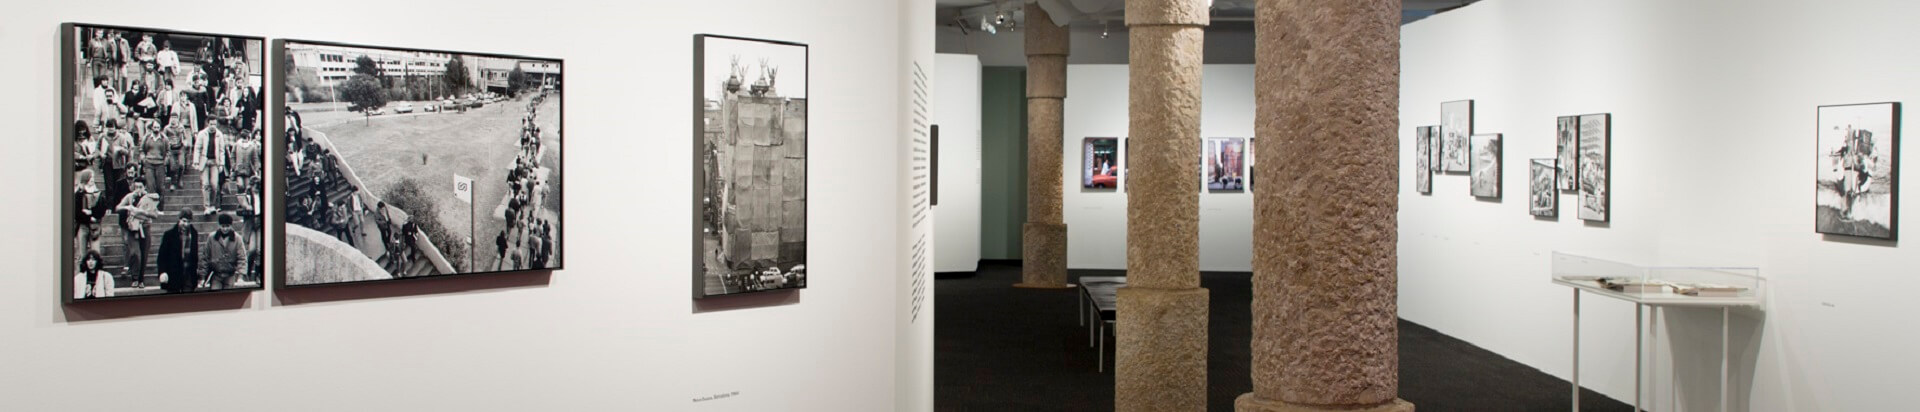 previous exhibitions la pedrera casa mila cultura barcelona